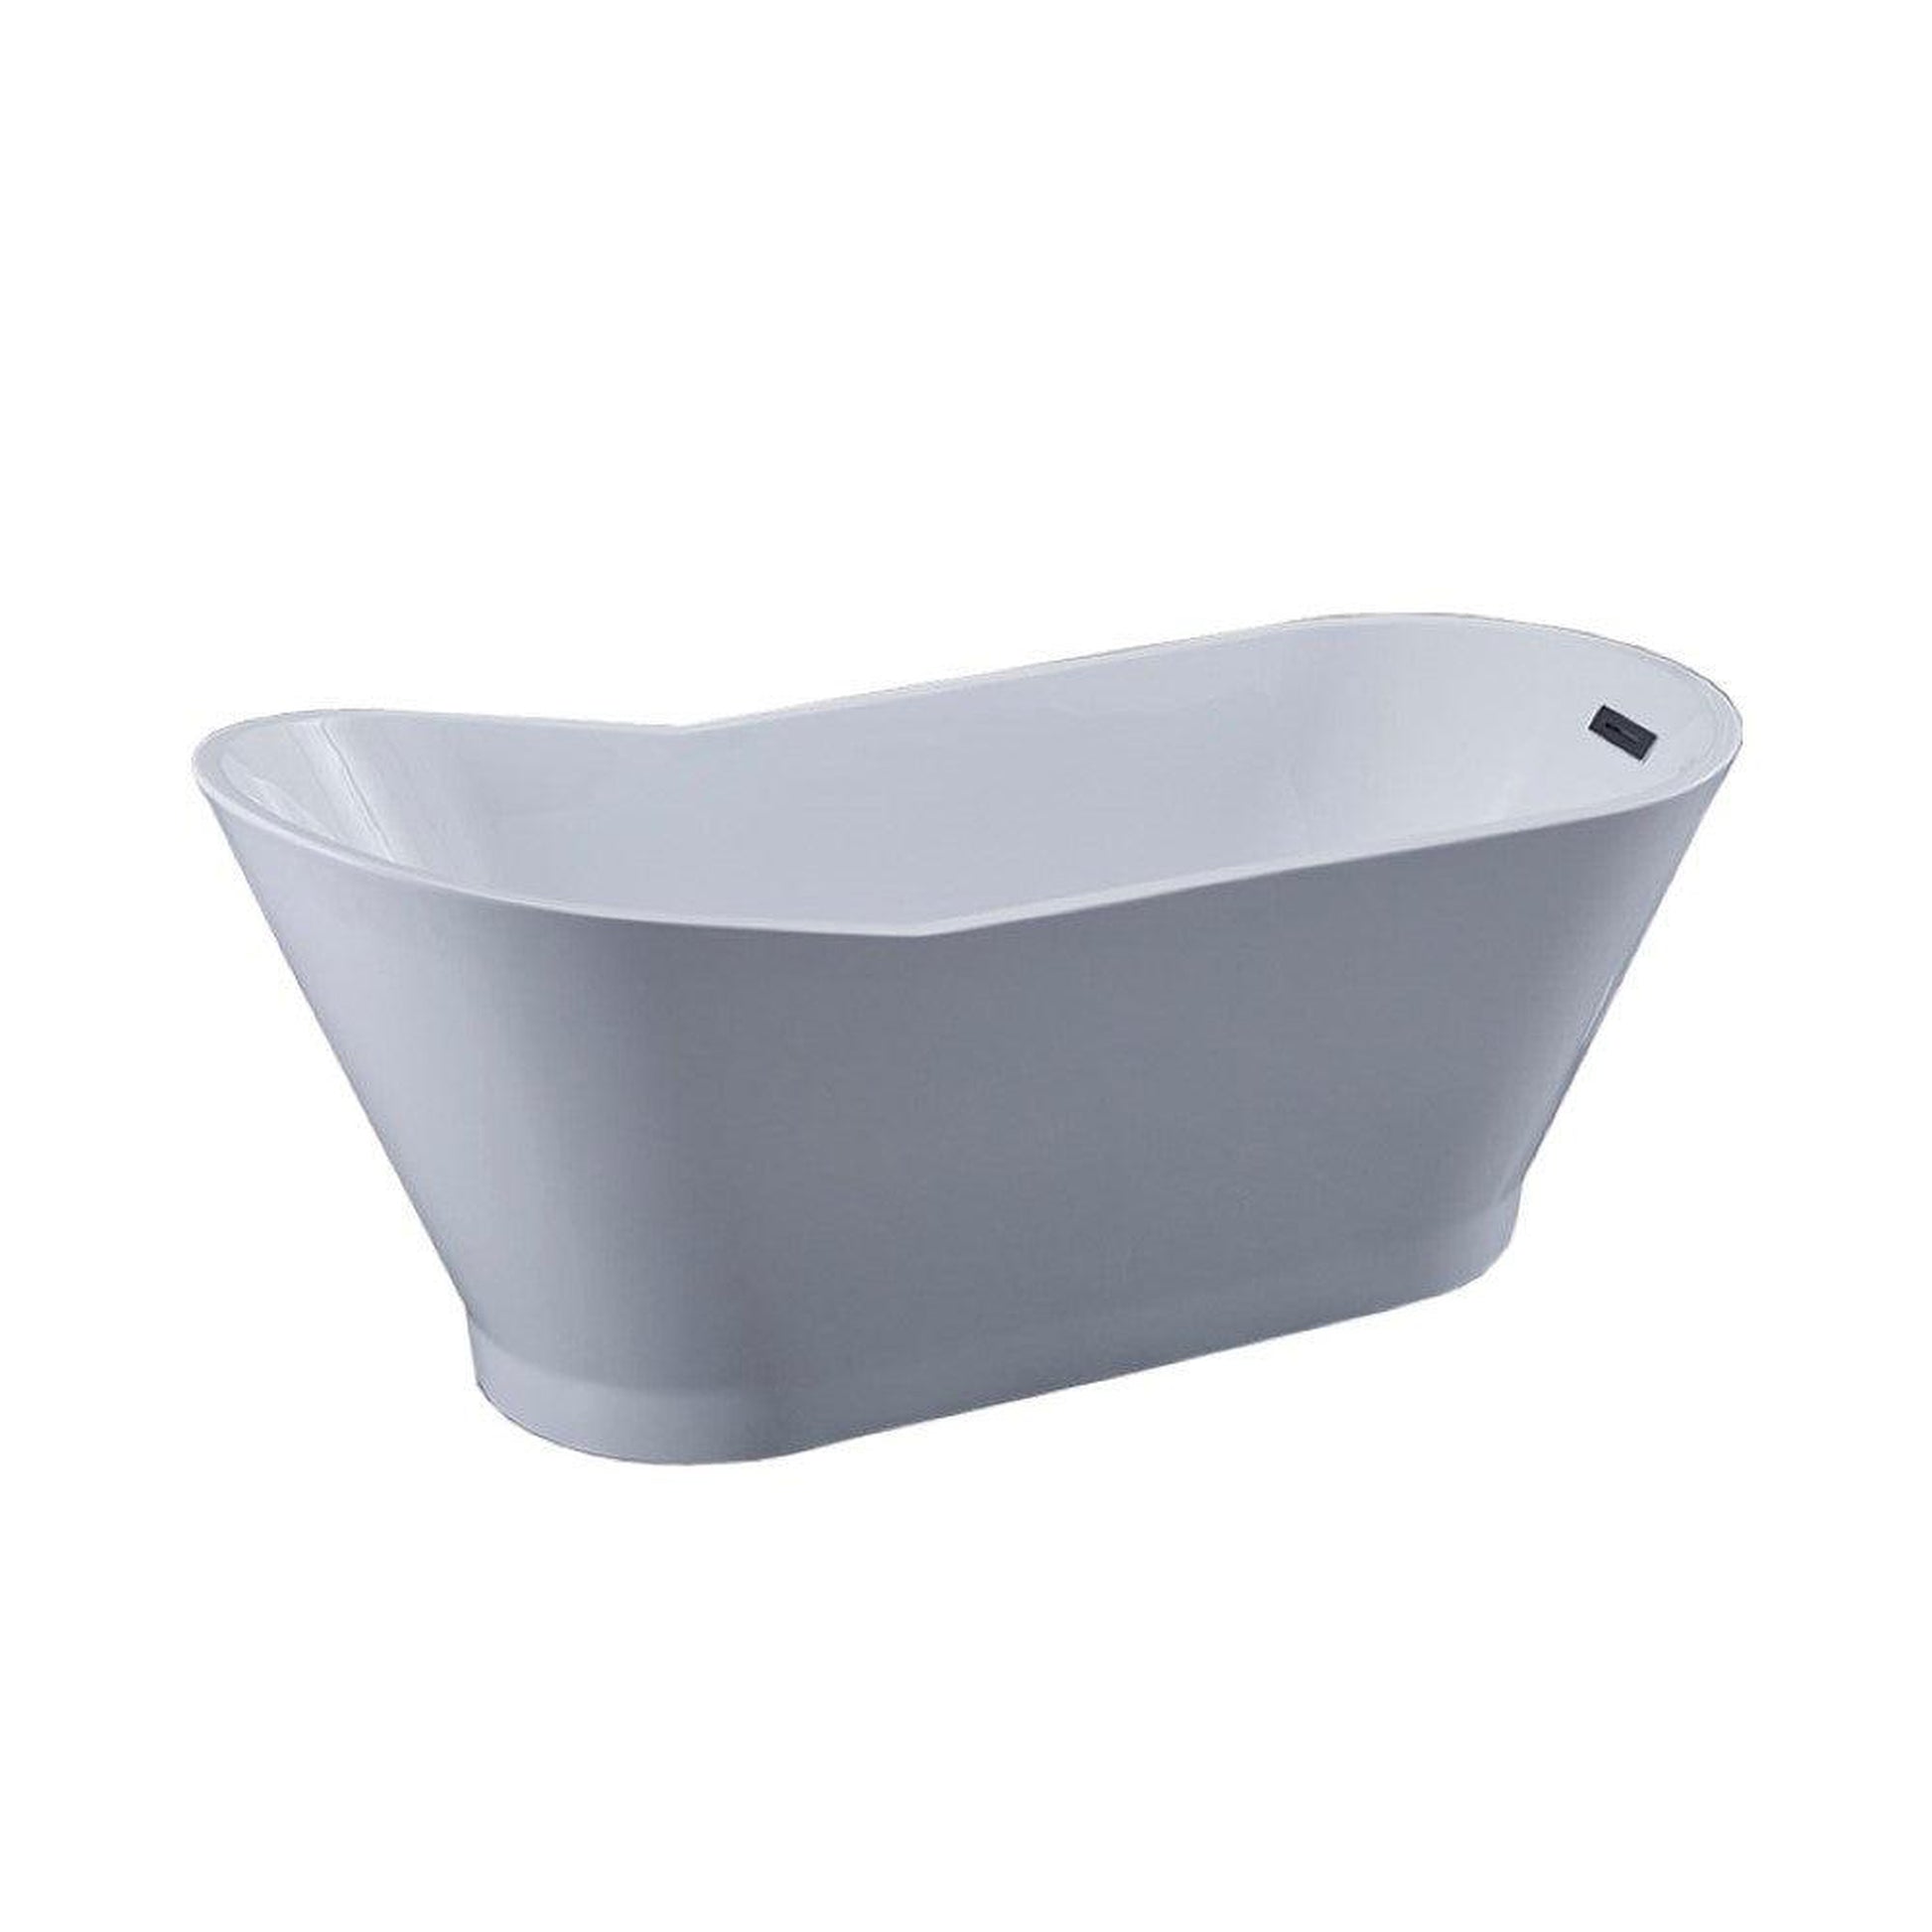 Bellaterra Home Melun 67" x 29" White Oval Acrylic Freestanding Slipper Soaking Bathtub